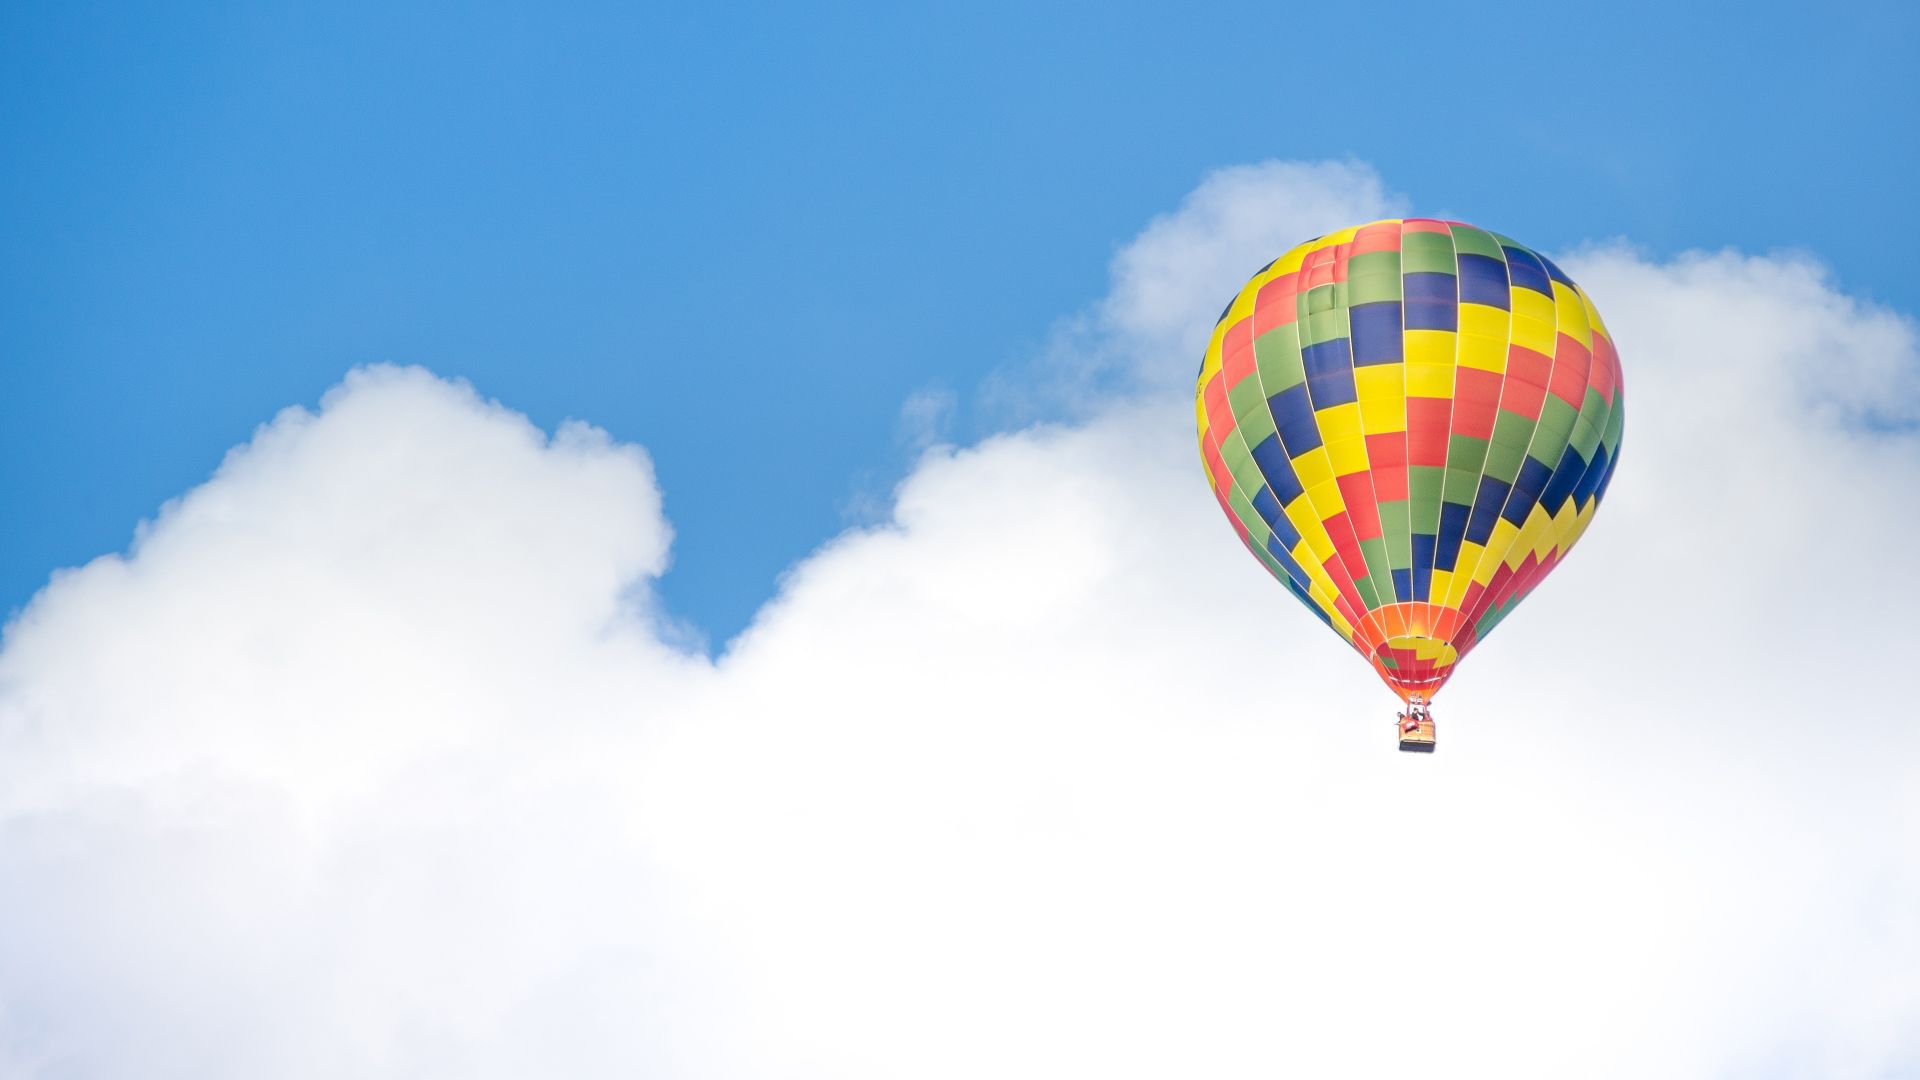 Вощдушный шар, 5k, 4k, голубое, небо, воздух, облака, Balloon, 5k, 4k wallpaper, ride, blue, sky, clouds (horizontal)